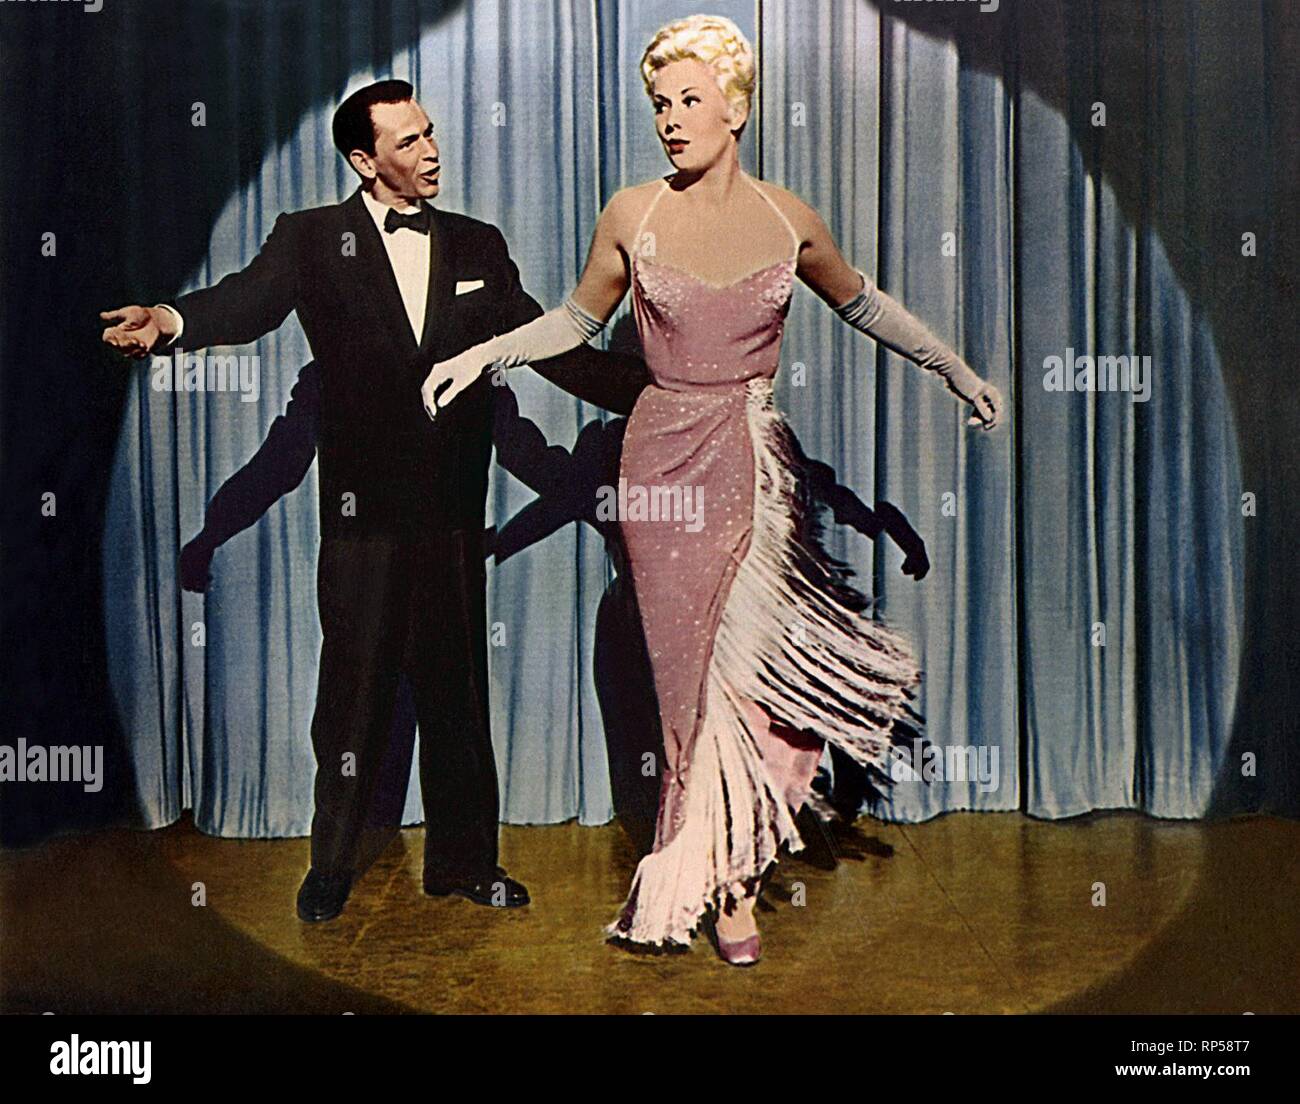 SINATRA, Novak, Pal Joey, 1957 Stockfotografie - Alamy